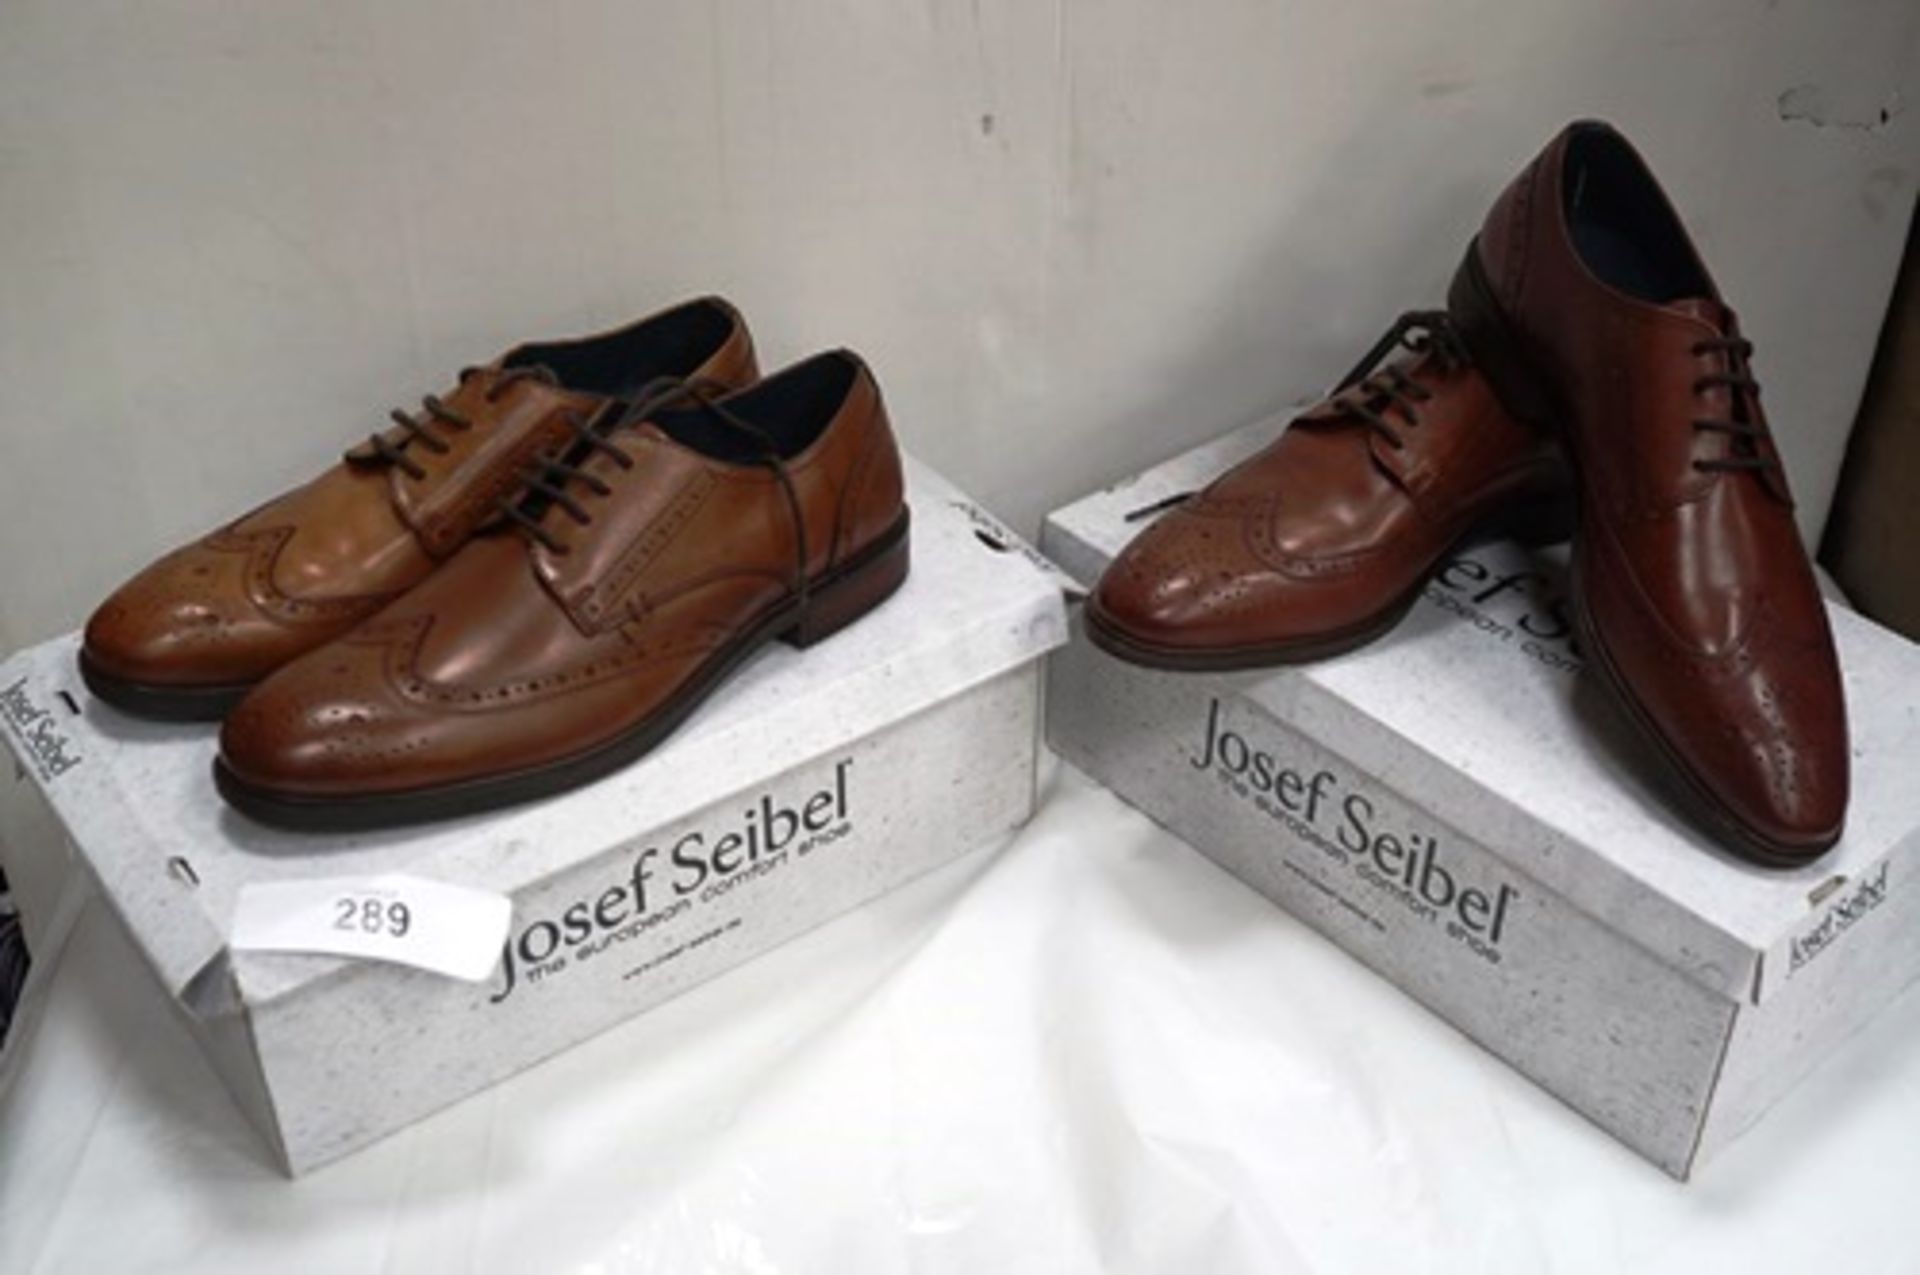 2 x pairs of Josef Seibel men's Johnathon brogues, EU sizes 41 and 42, and 4 x pairs of Toni Pons